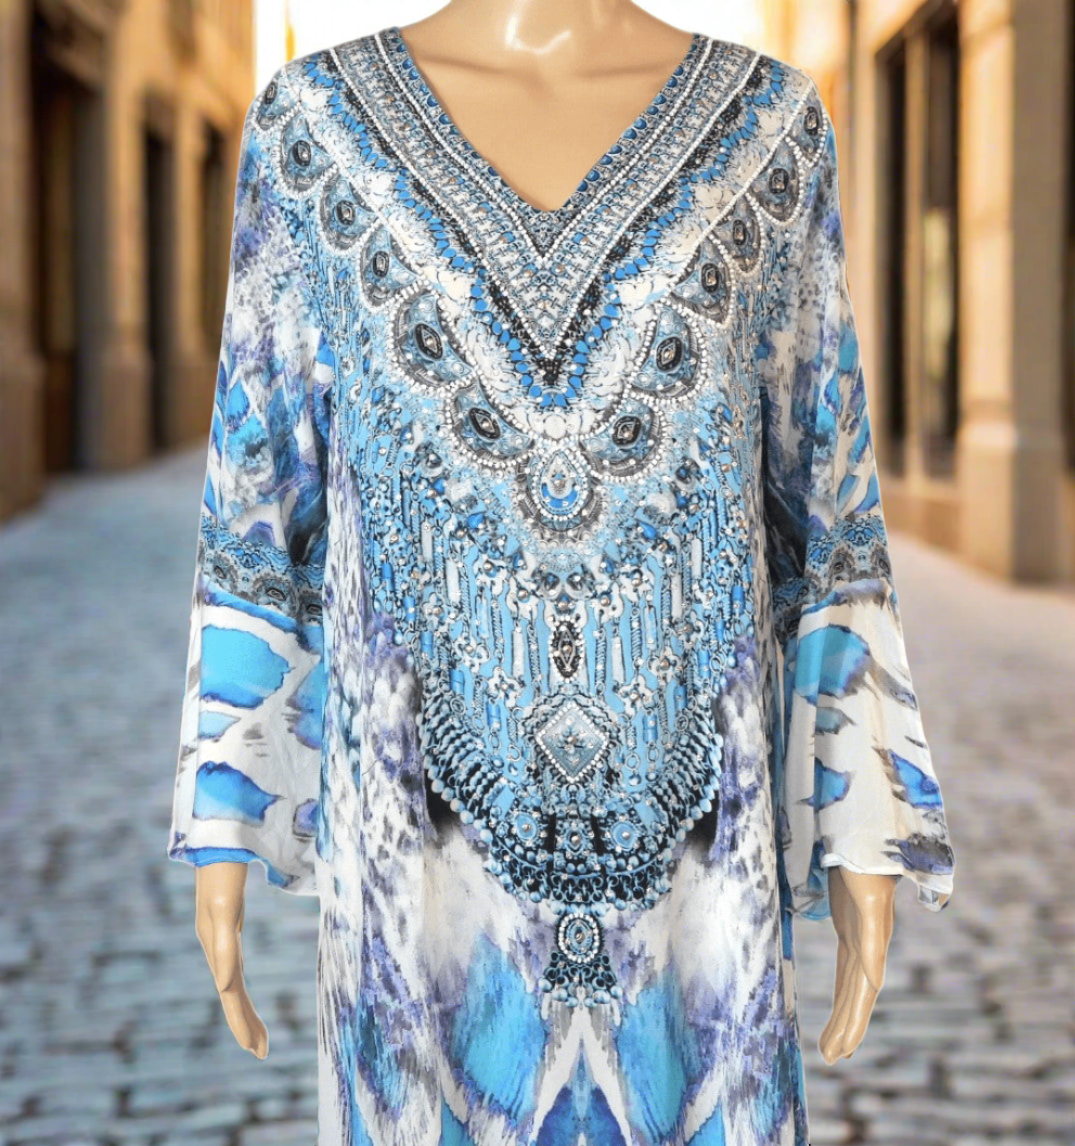 Silk Hi-Low Frill Dress - Paluma- by Fashion Spectrum - Kaftans that Bling